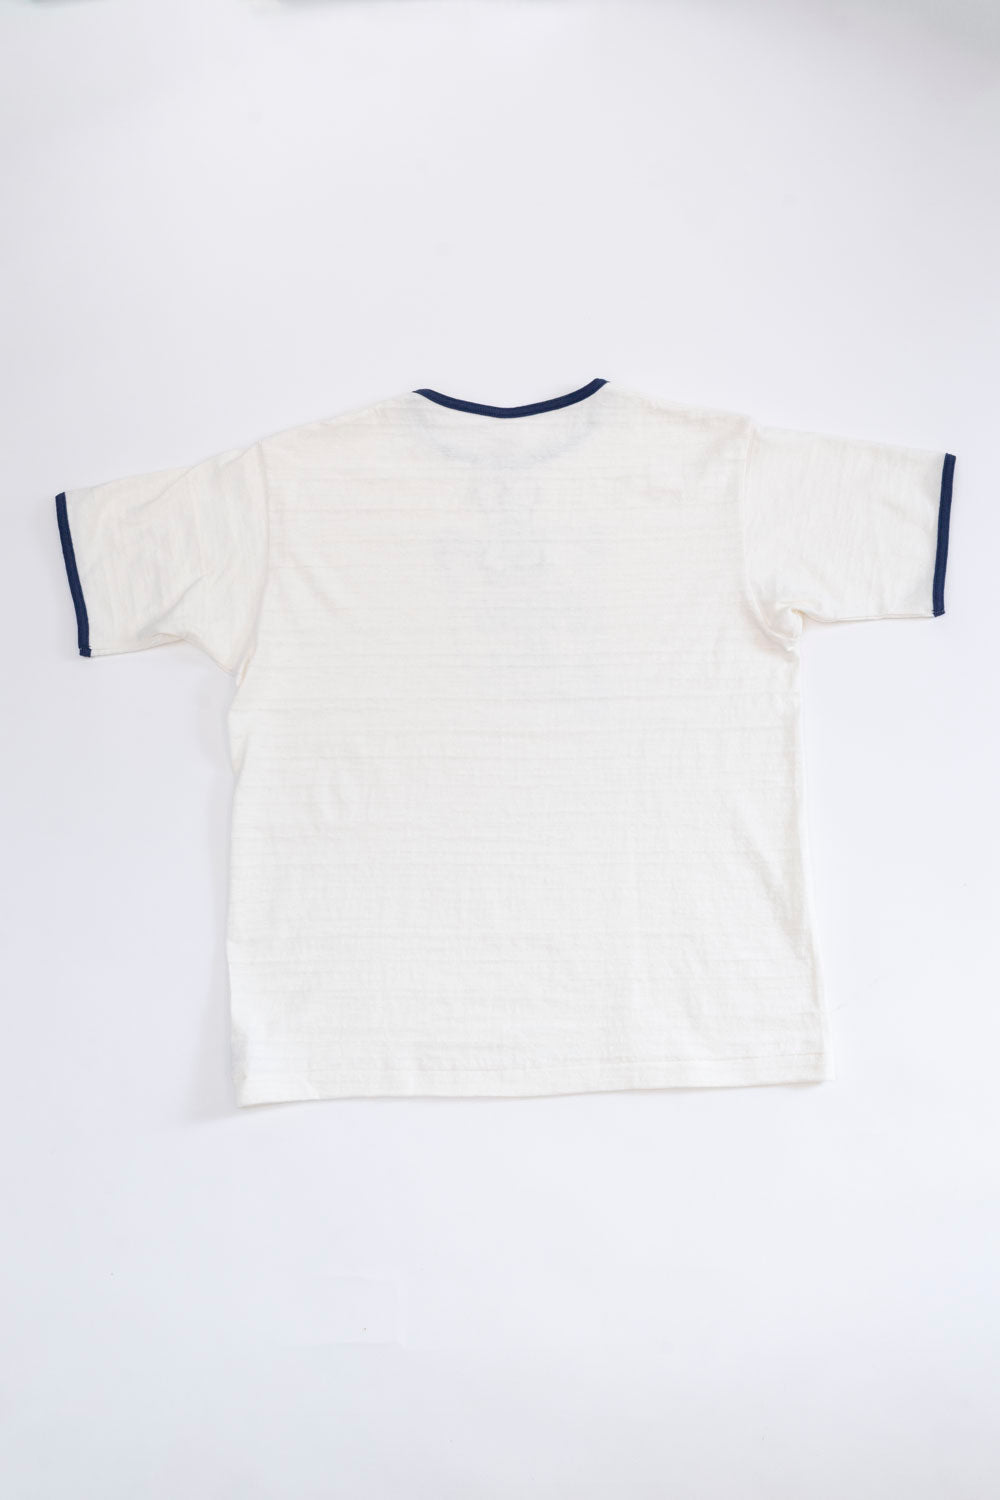 Lot 4059 - O-ring Ringer T-Shirt - Cream, Navy